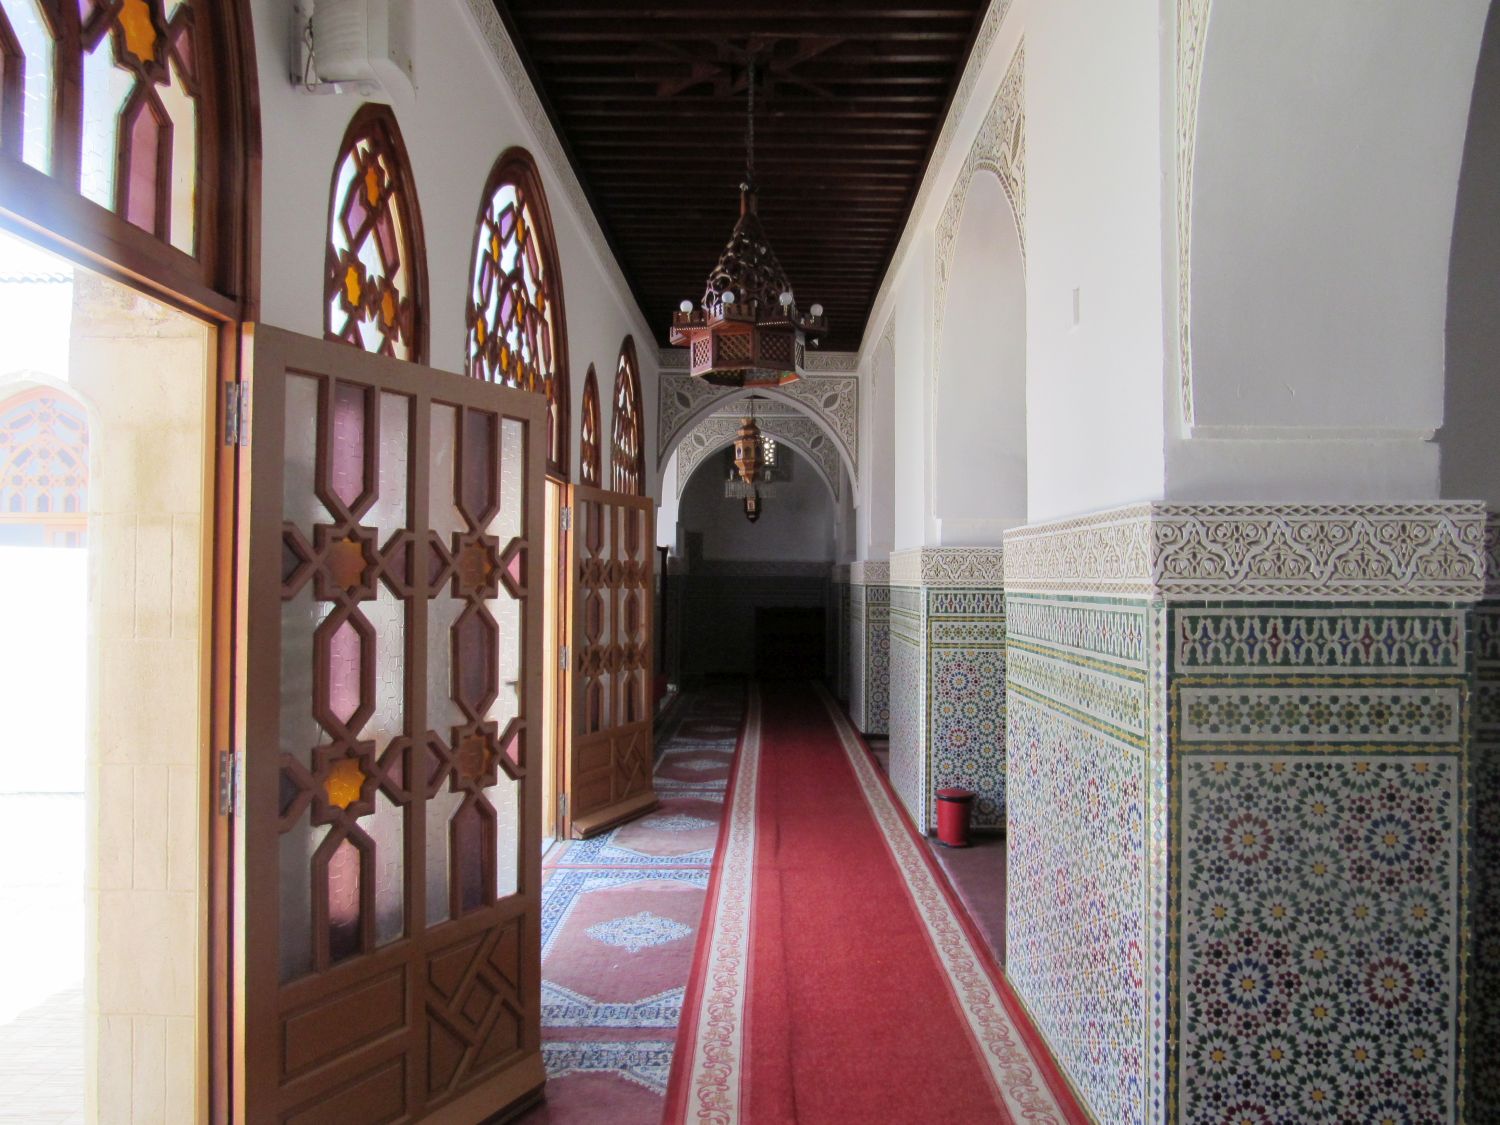 Interior view, hallway.